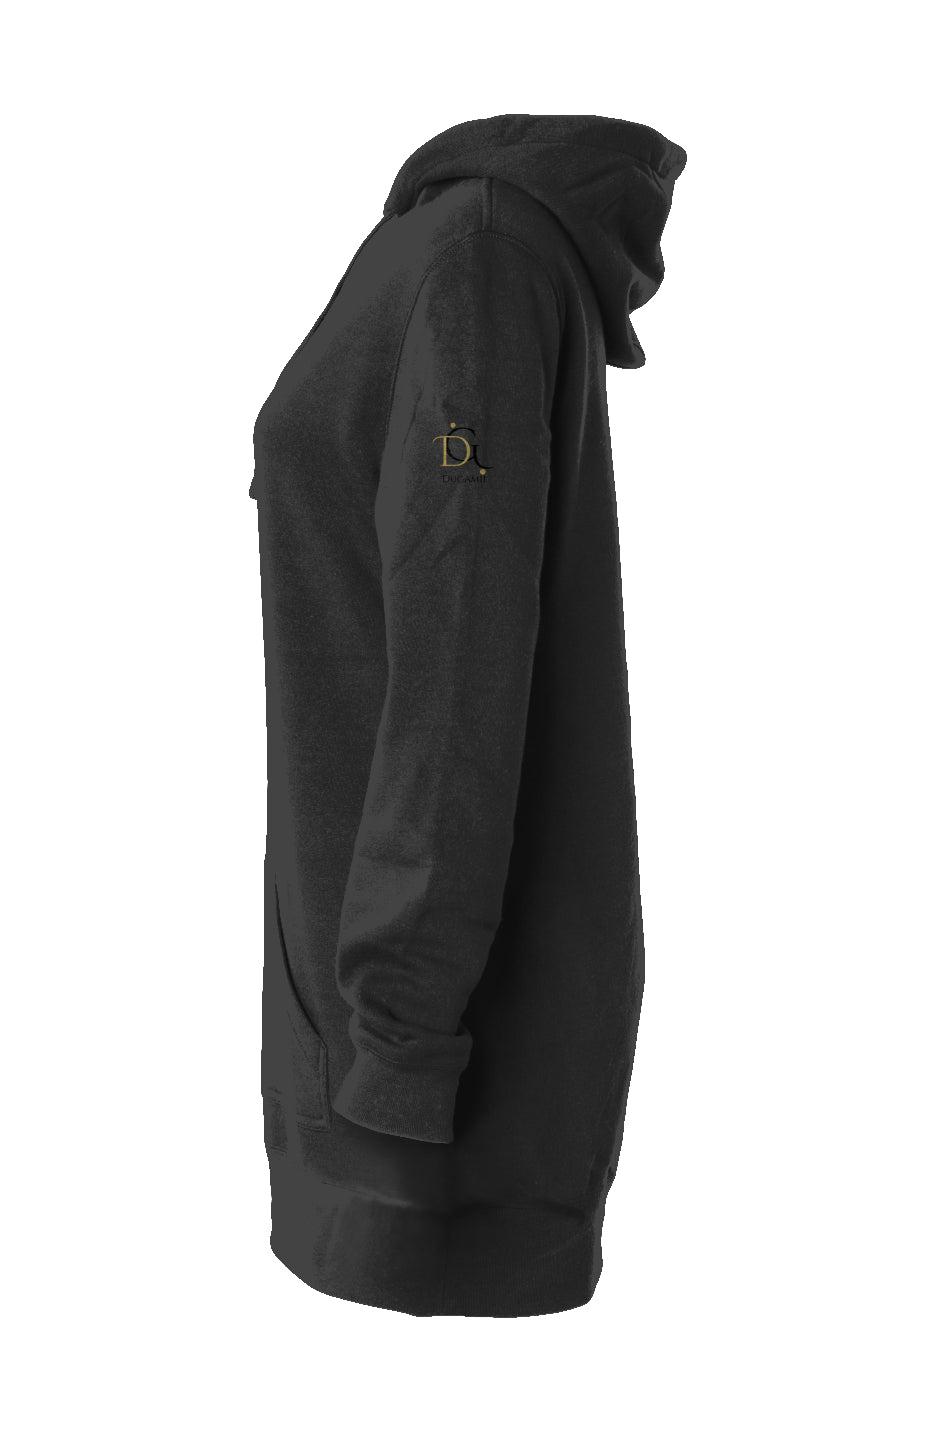 DuGamii Black Hooded Sweatshirt Dress